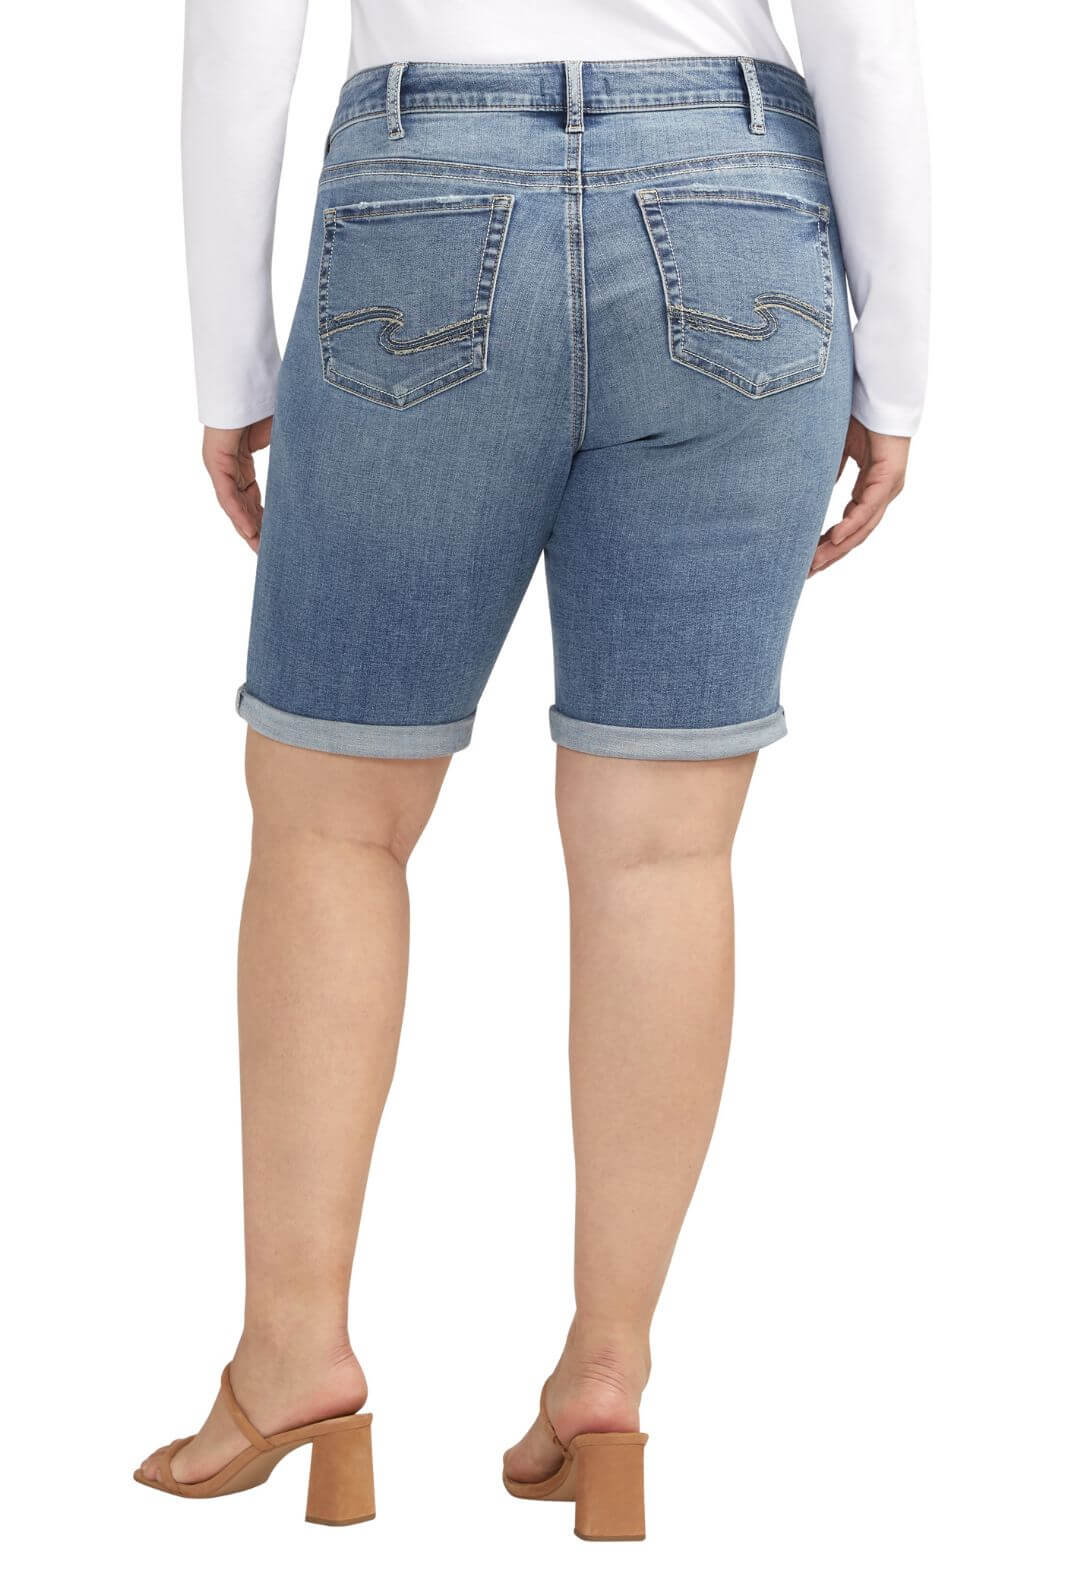 Silver Jeans Plus Size Elyse Bermuda Shorts